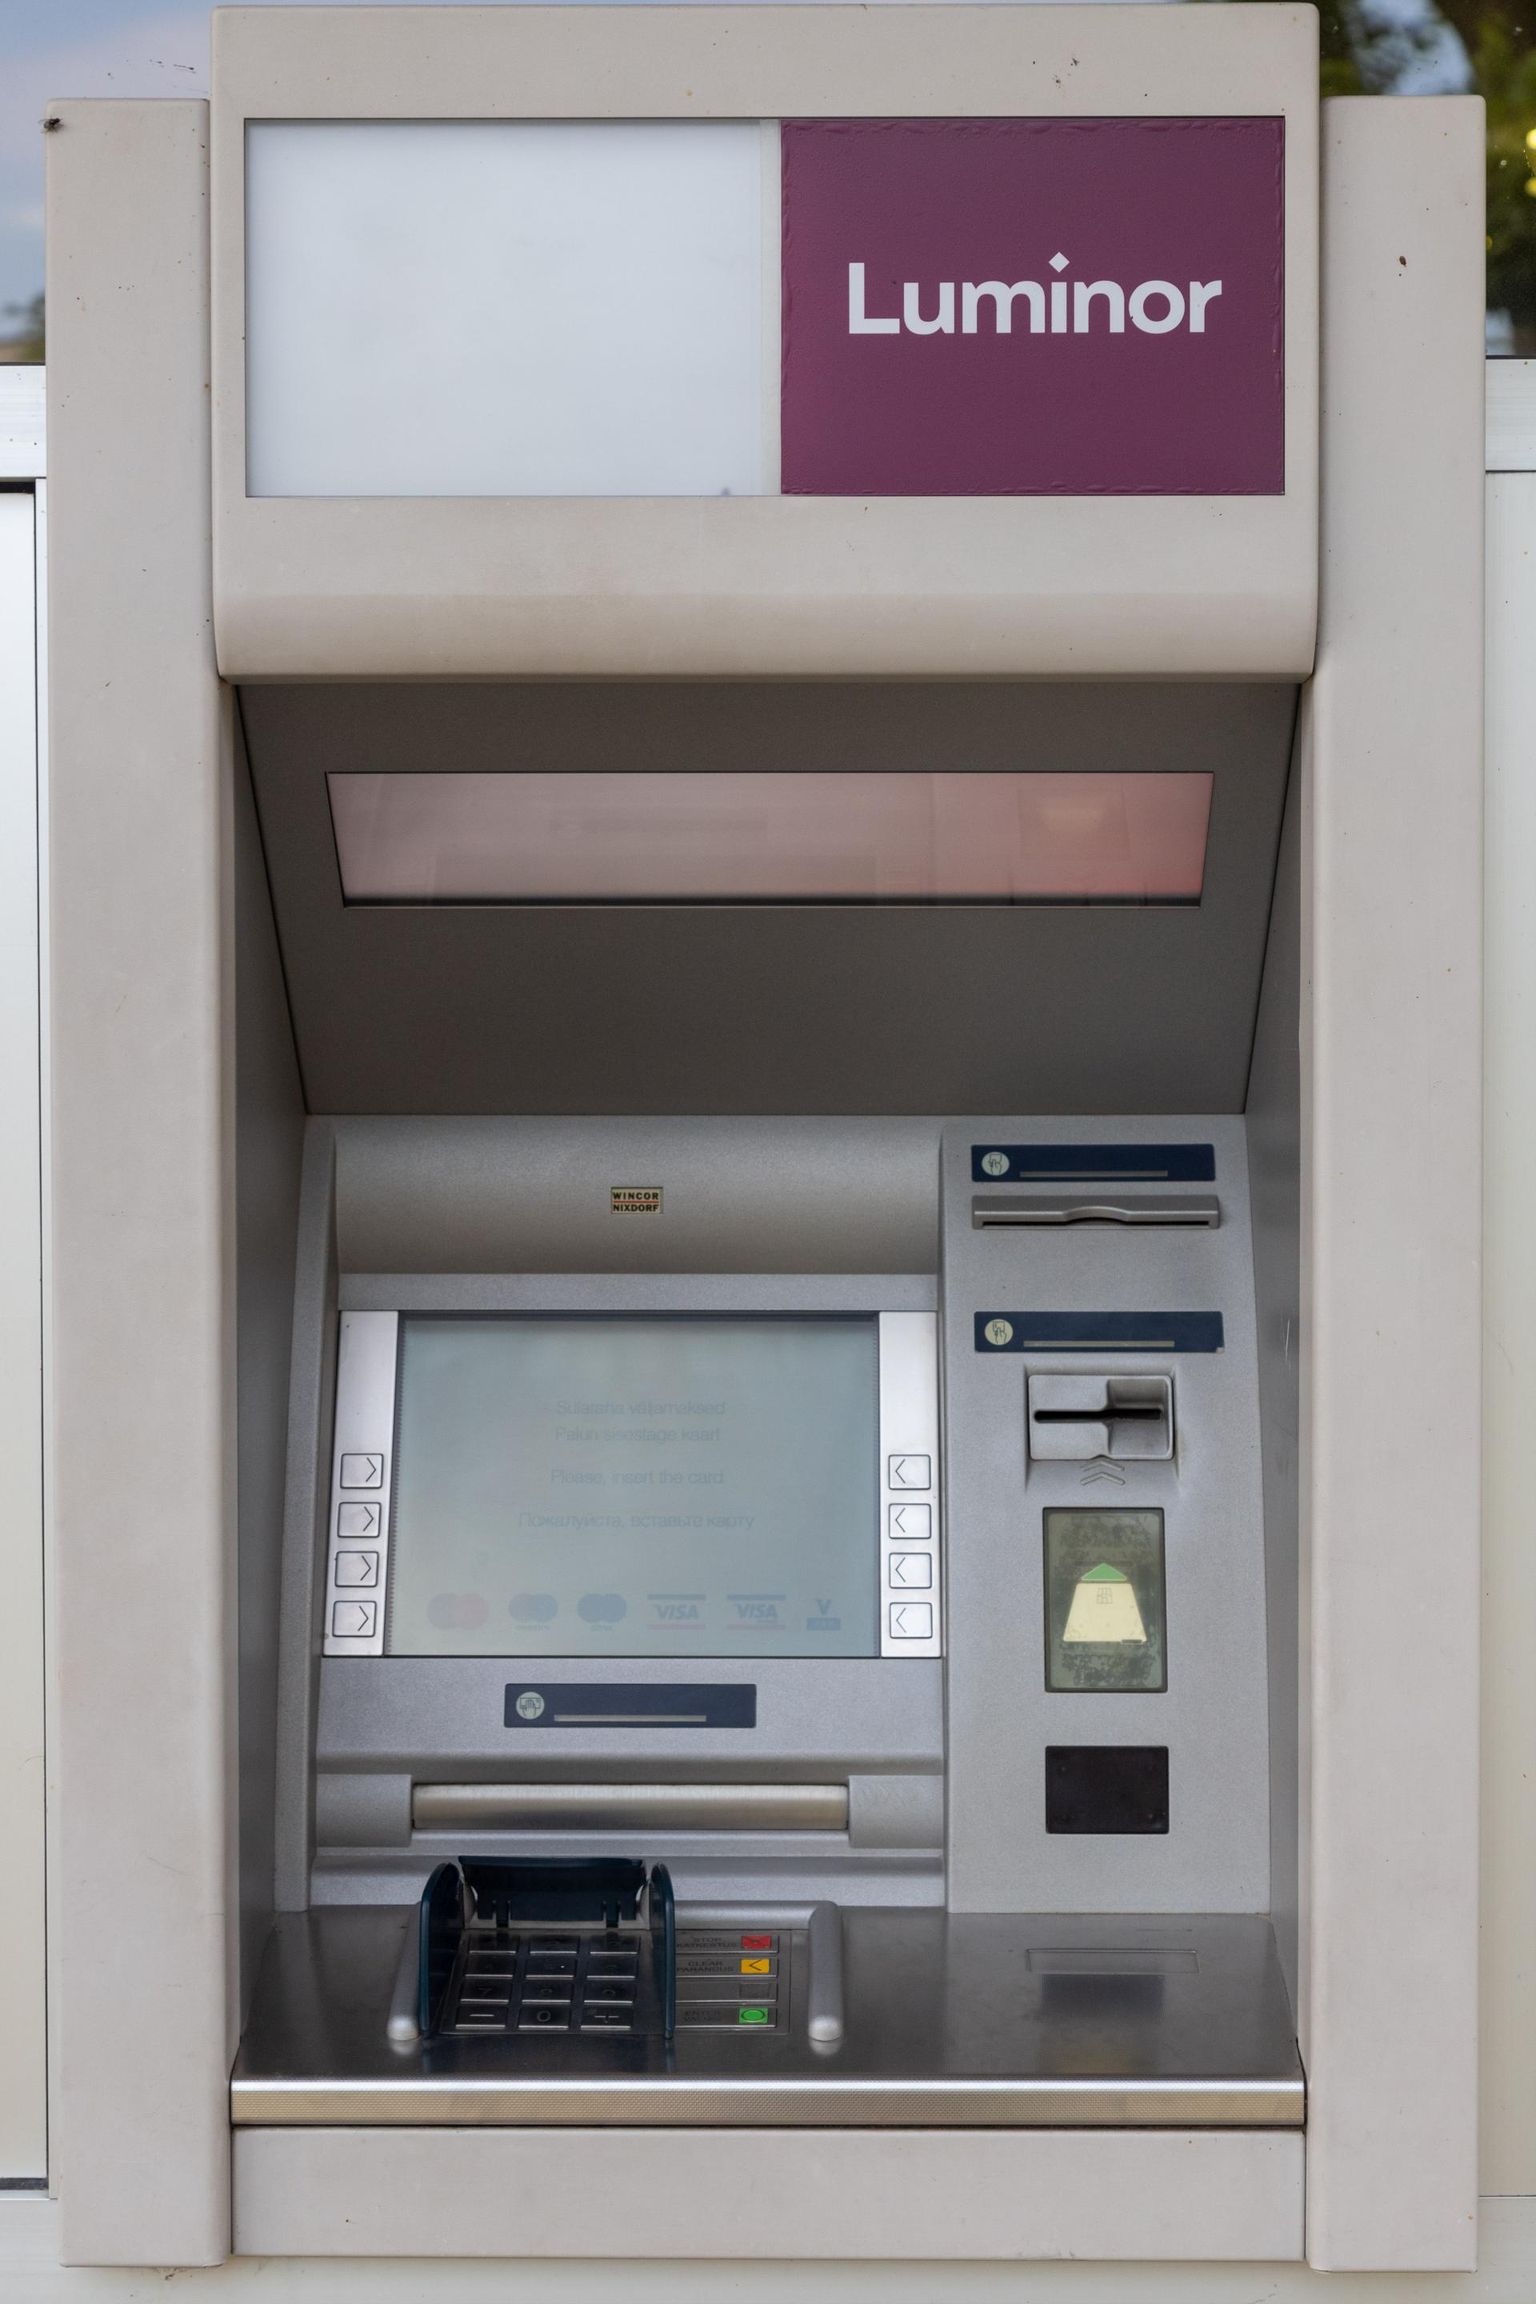 Luminori pangaautomaatide töö on häiritud.